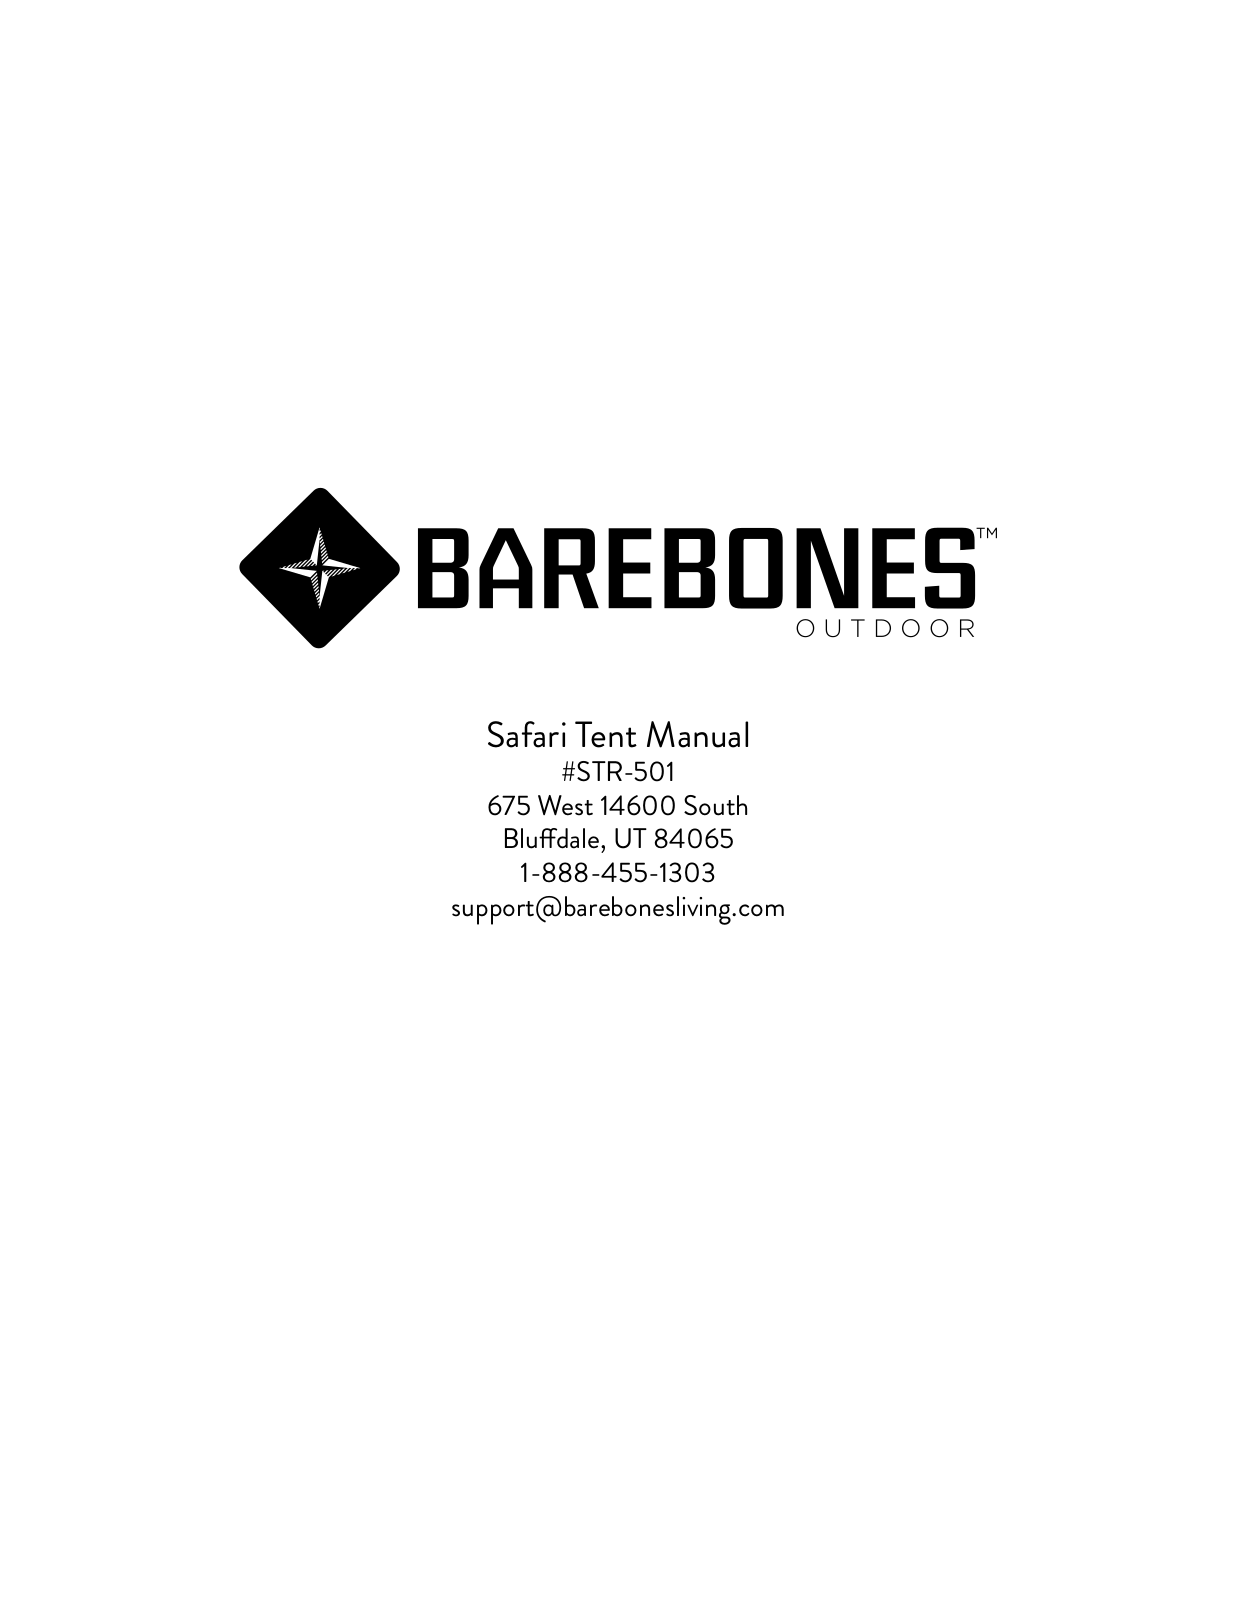 Barebones Safari User Manual